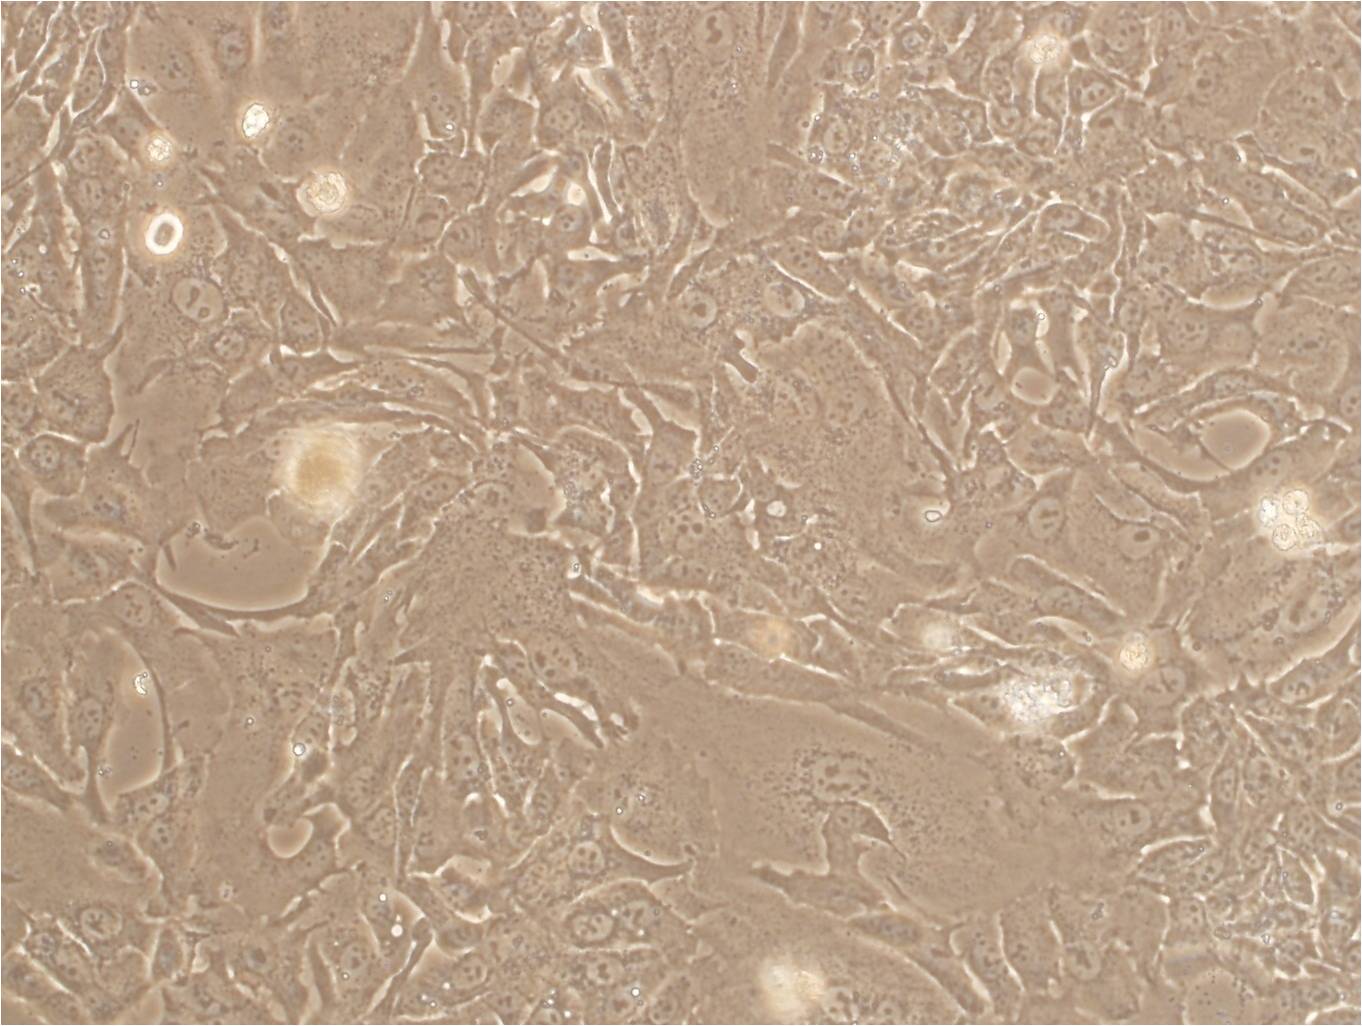 NCI-H1355 cell line人非小细胞肺癌细胞系,NCI-H1355 cell line